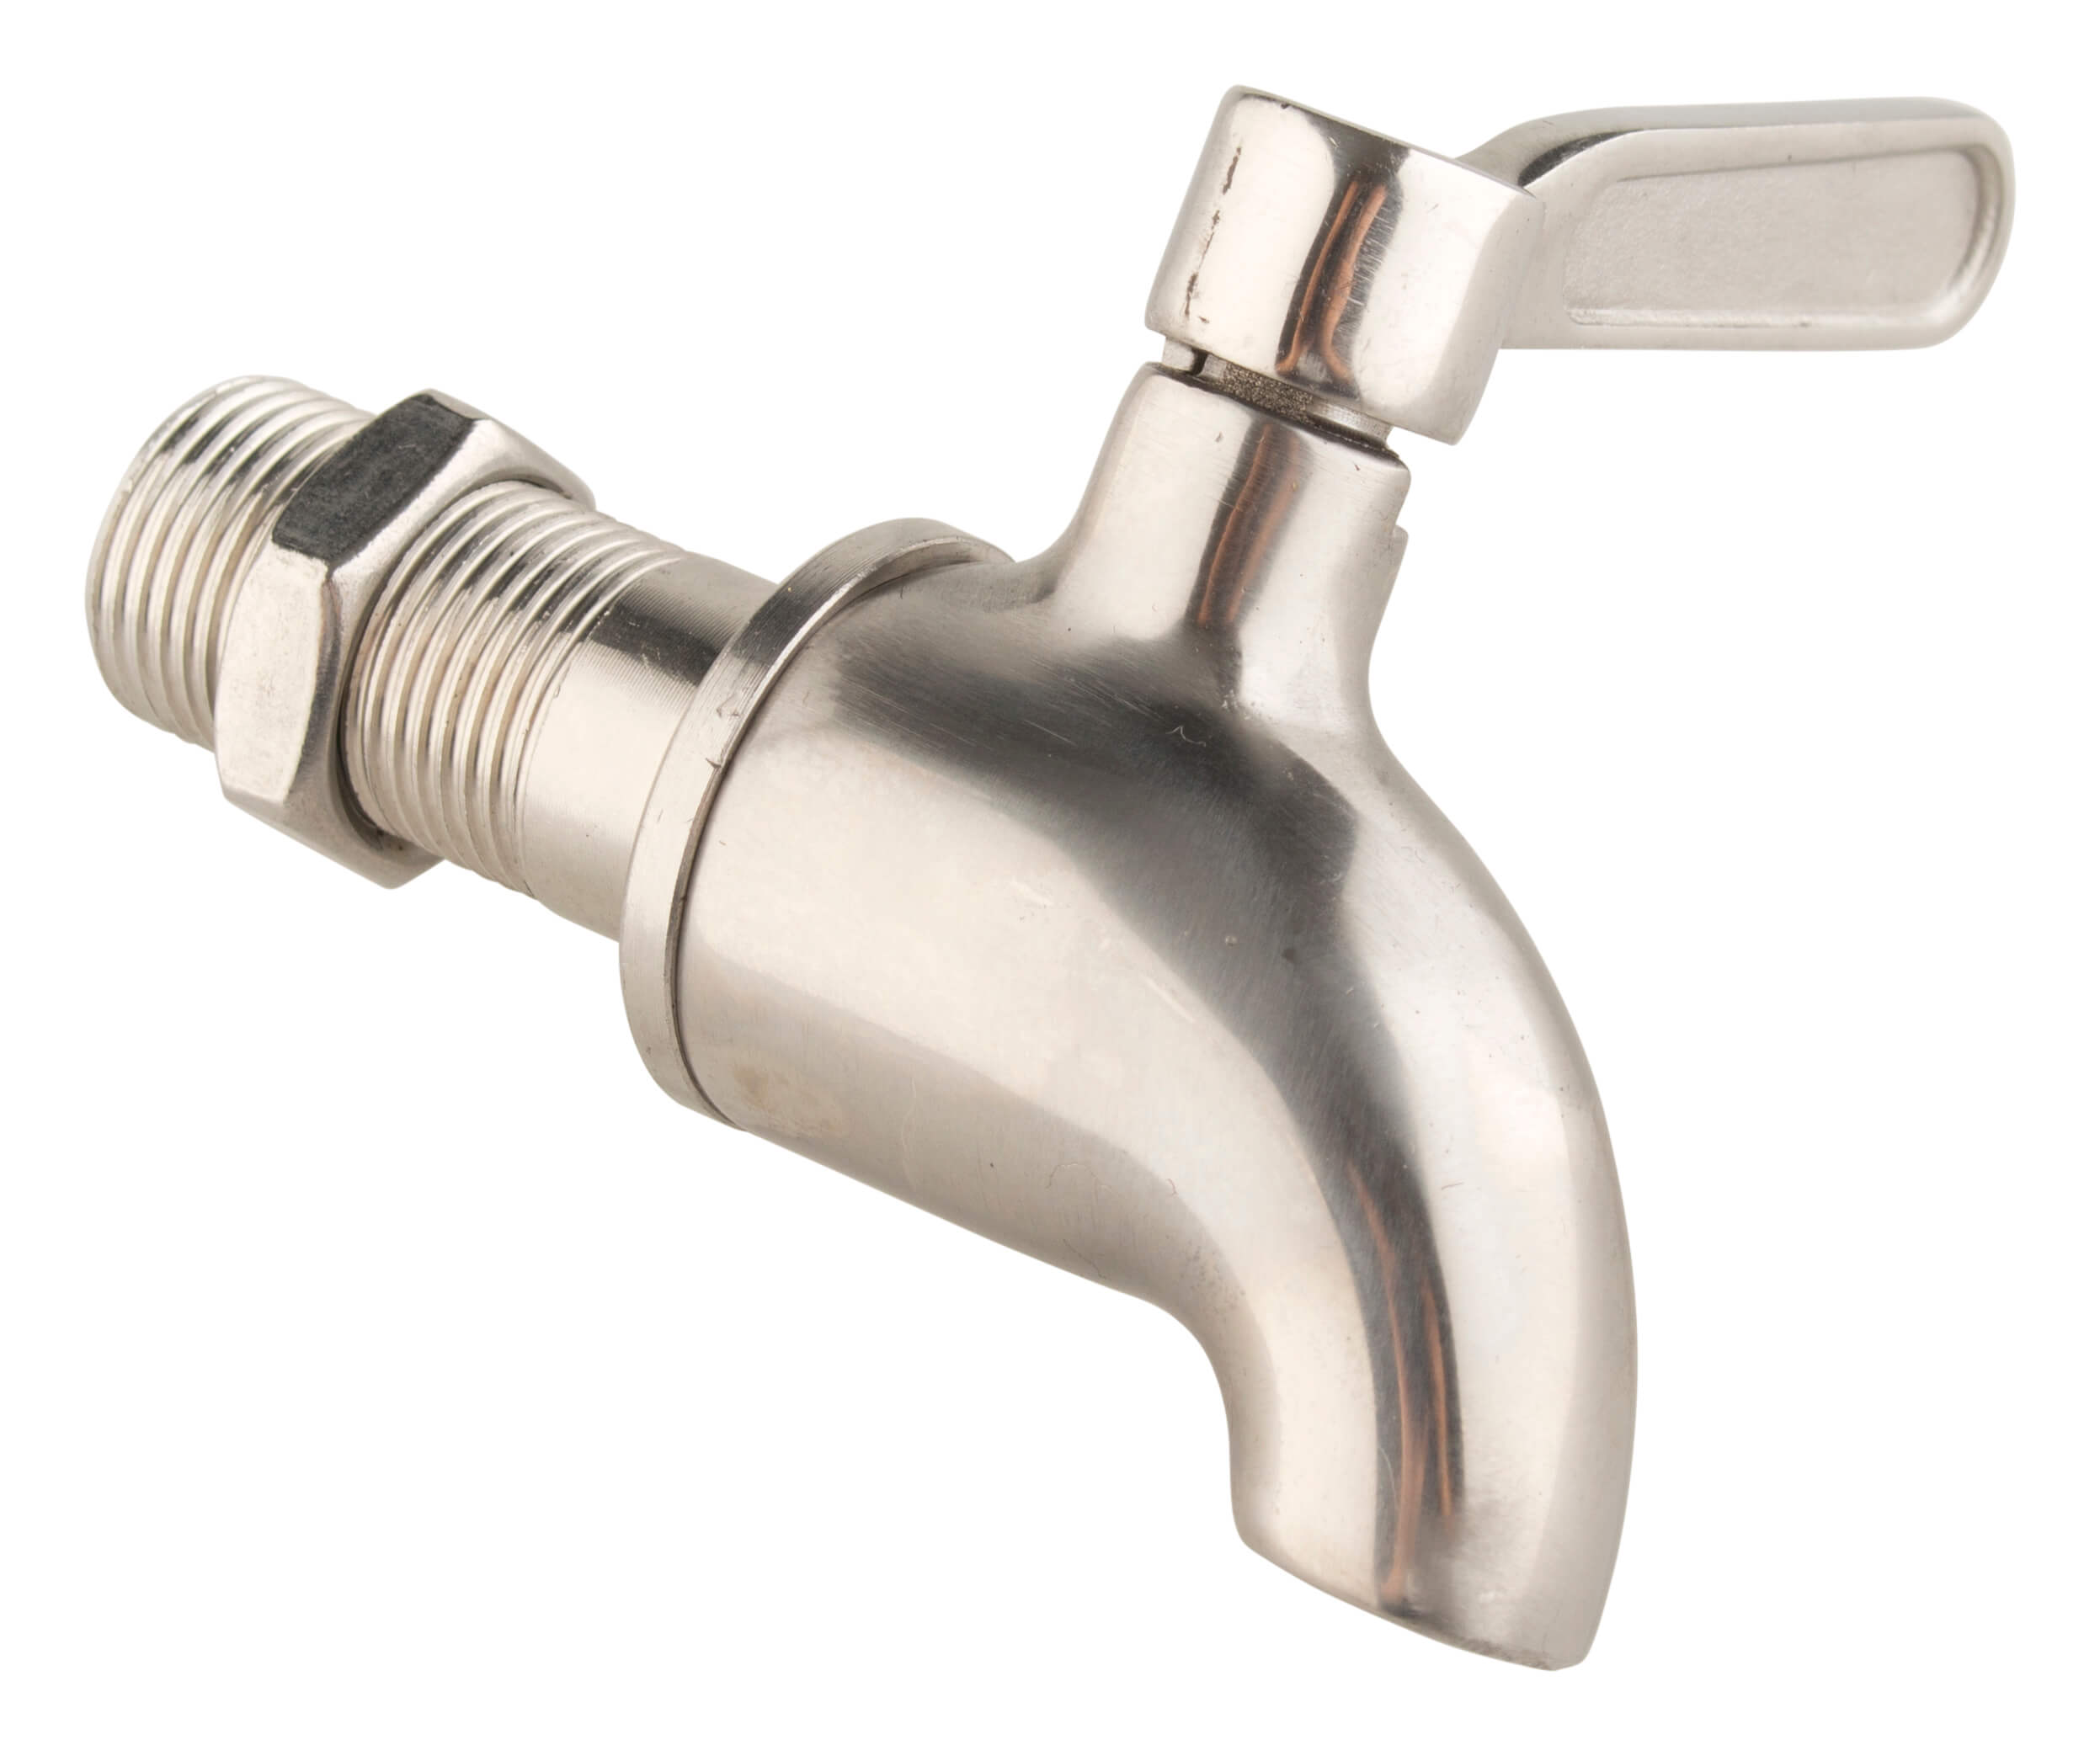 Stainless steel tap for drink dispenser